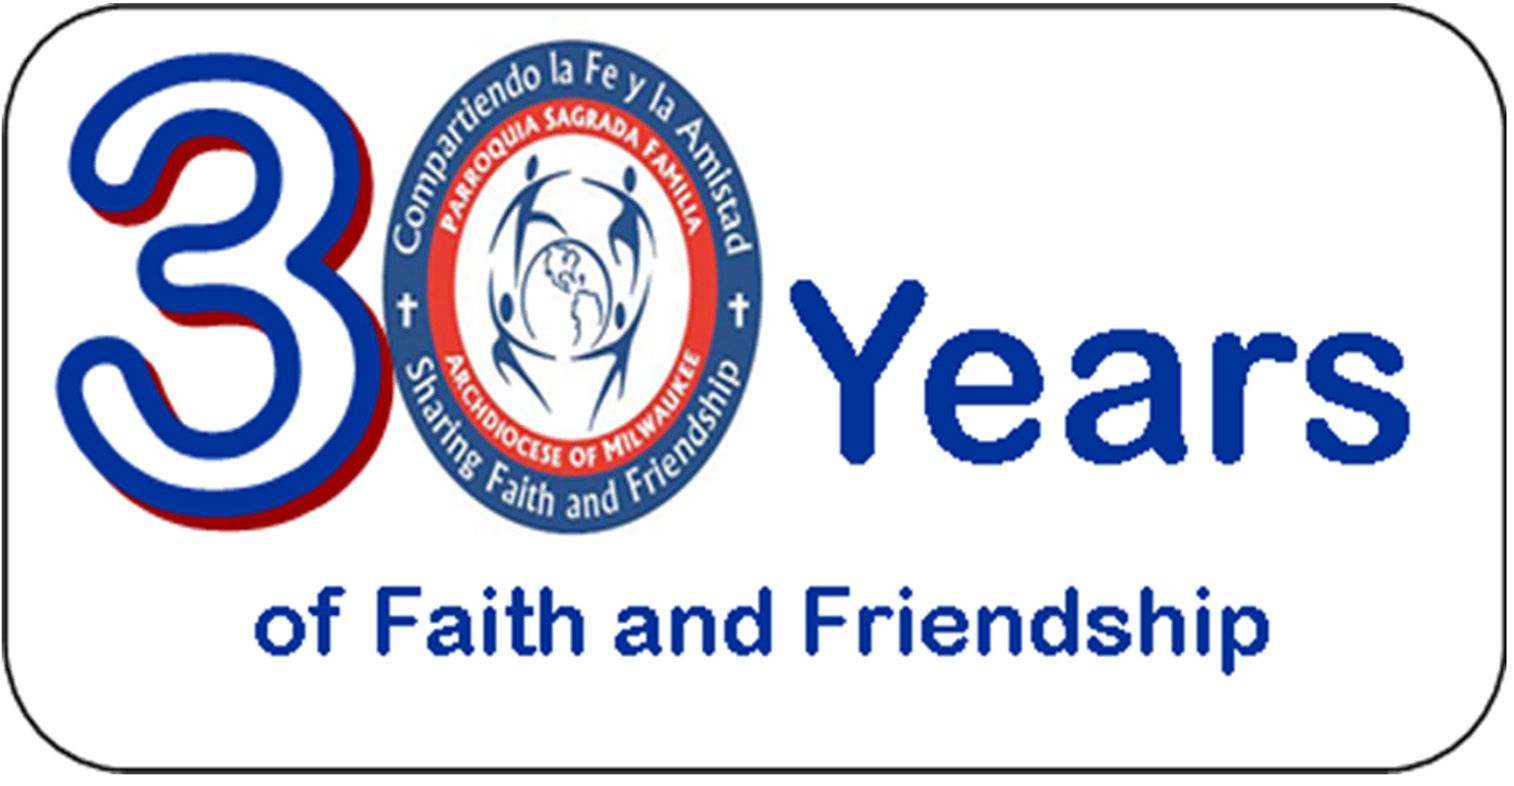 Sagrada Familia - 30 Years of Faith and Friendship